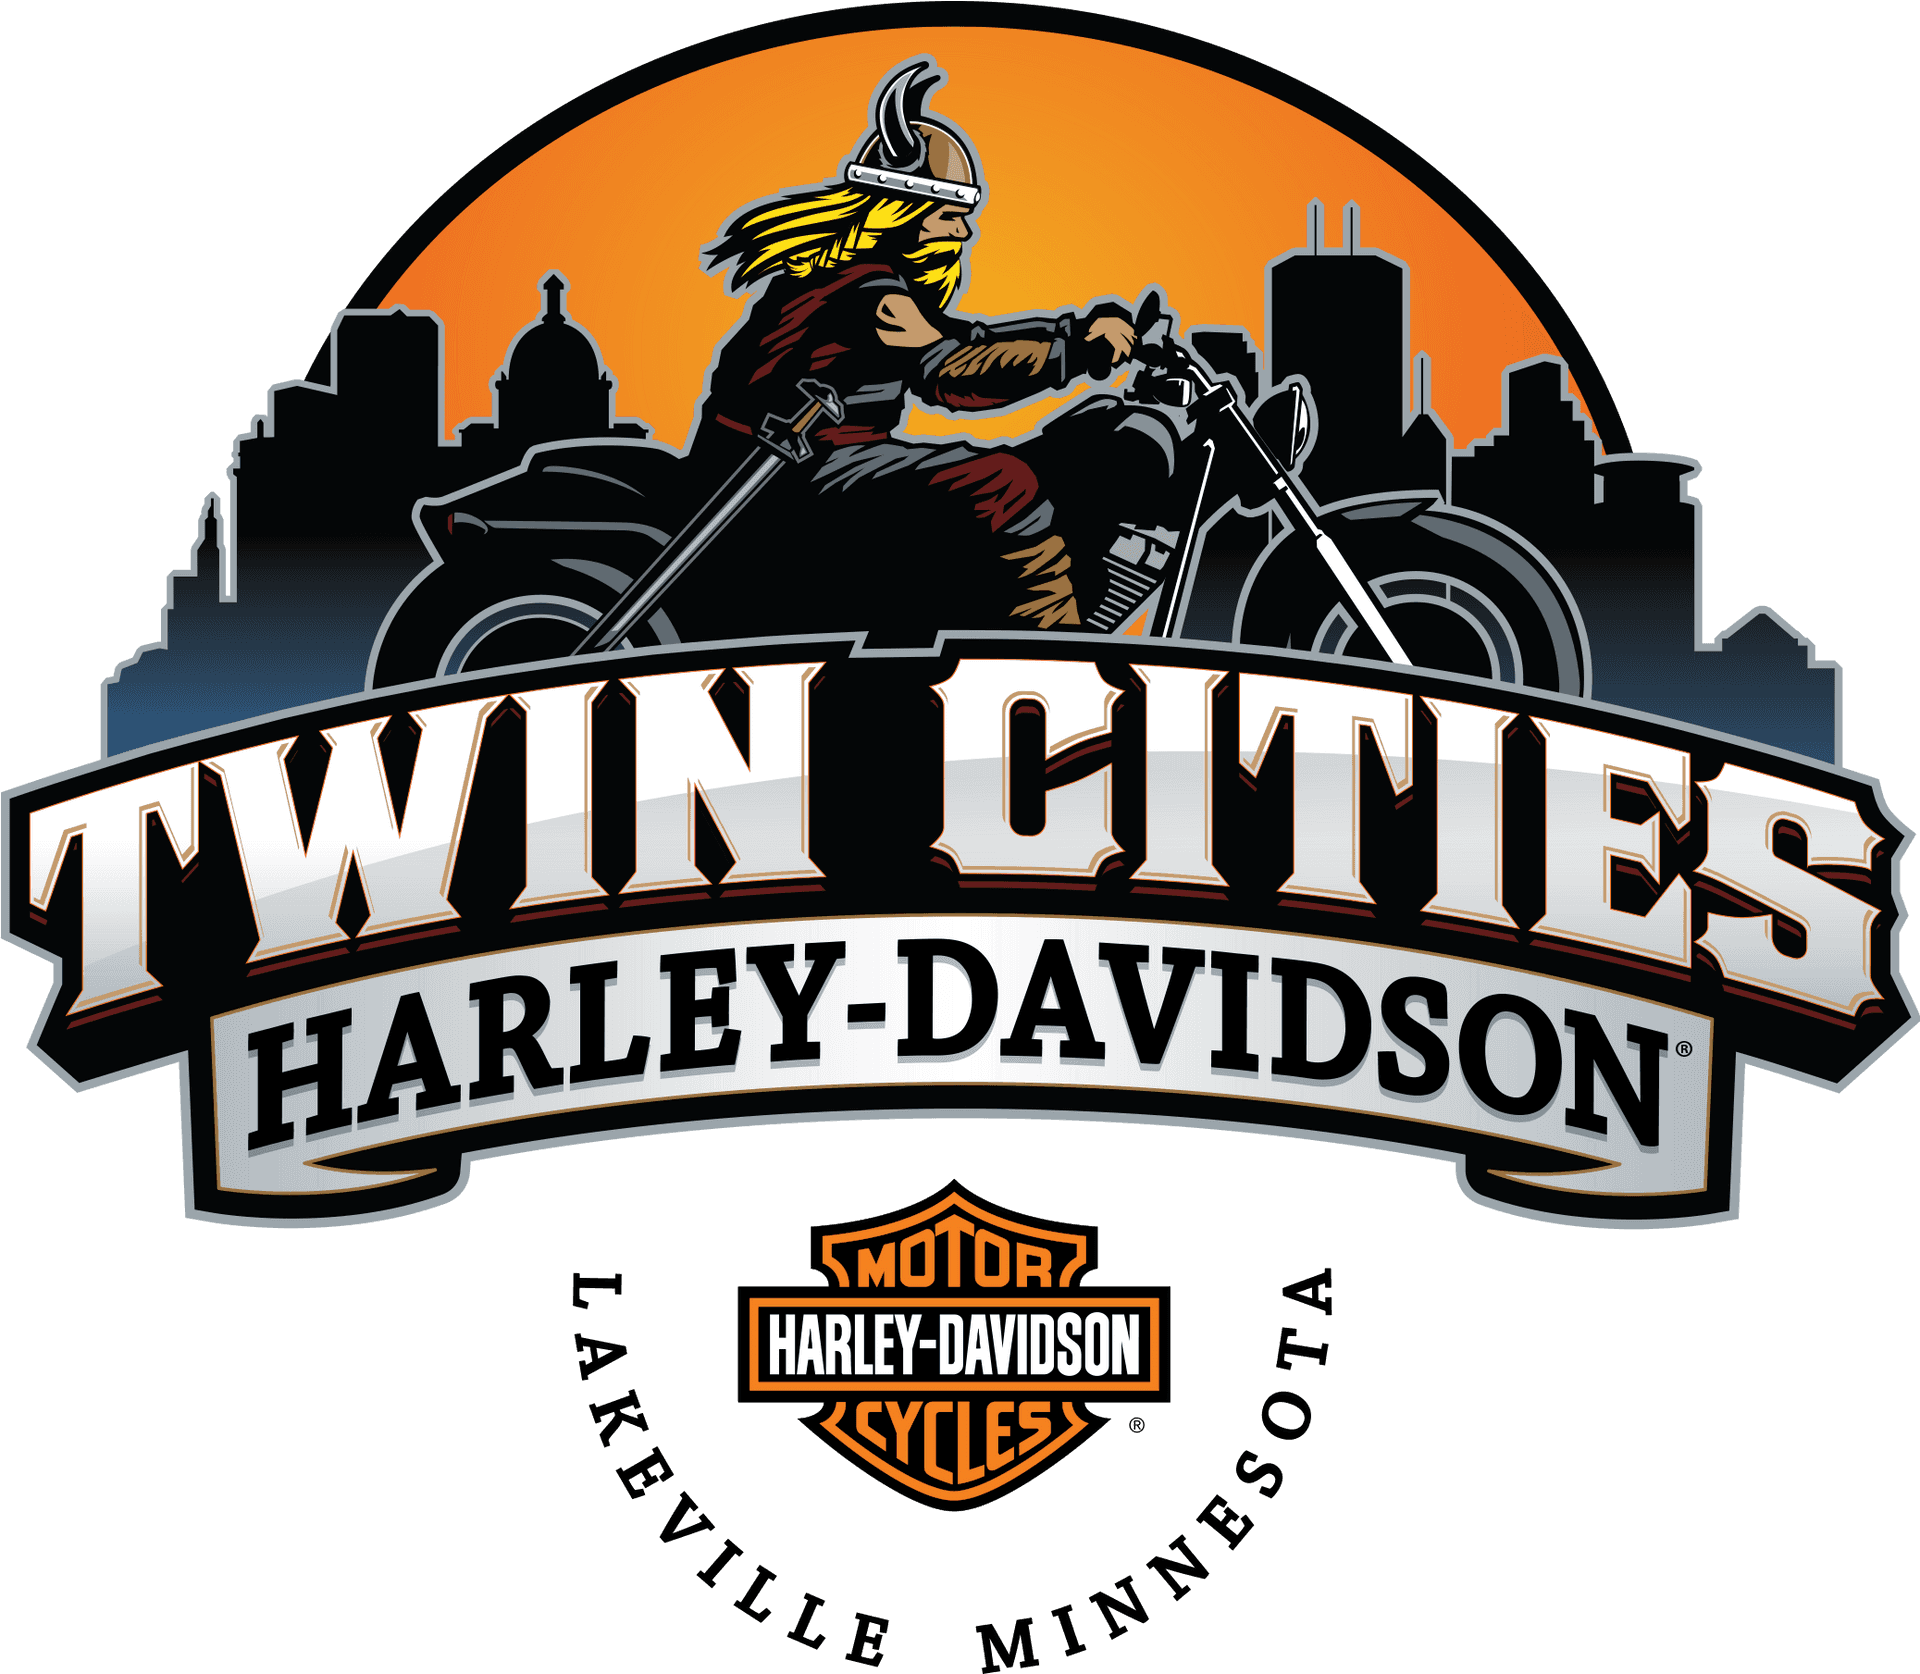 Twin Cities Harley Davidson Logo PNG image